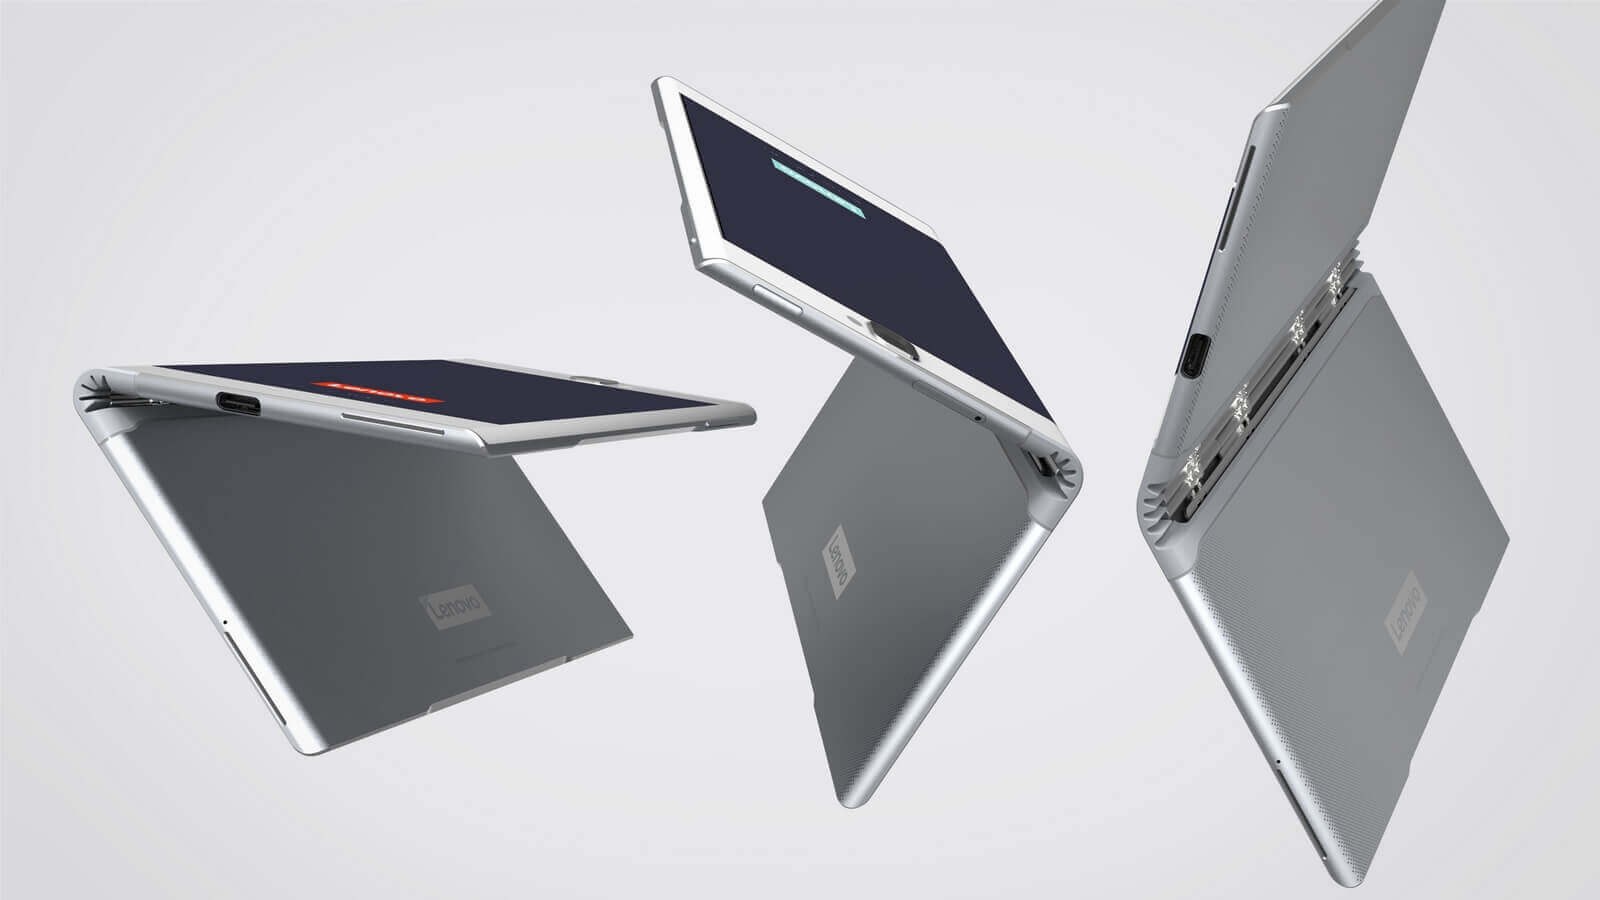 Flex tablet Lenovo